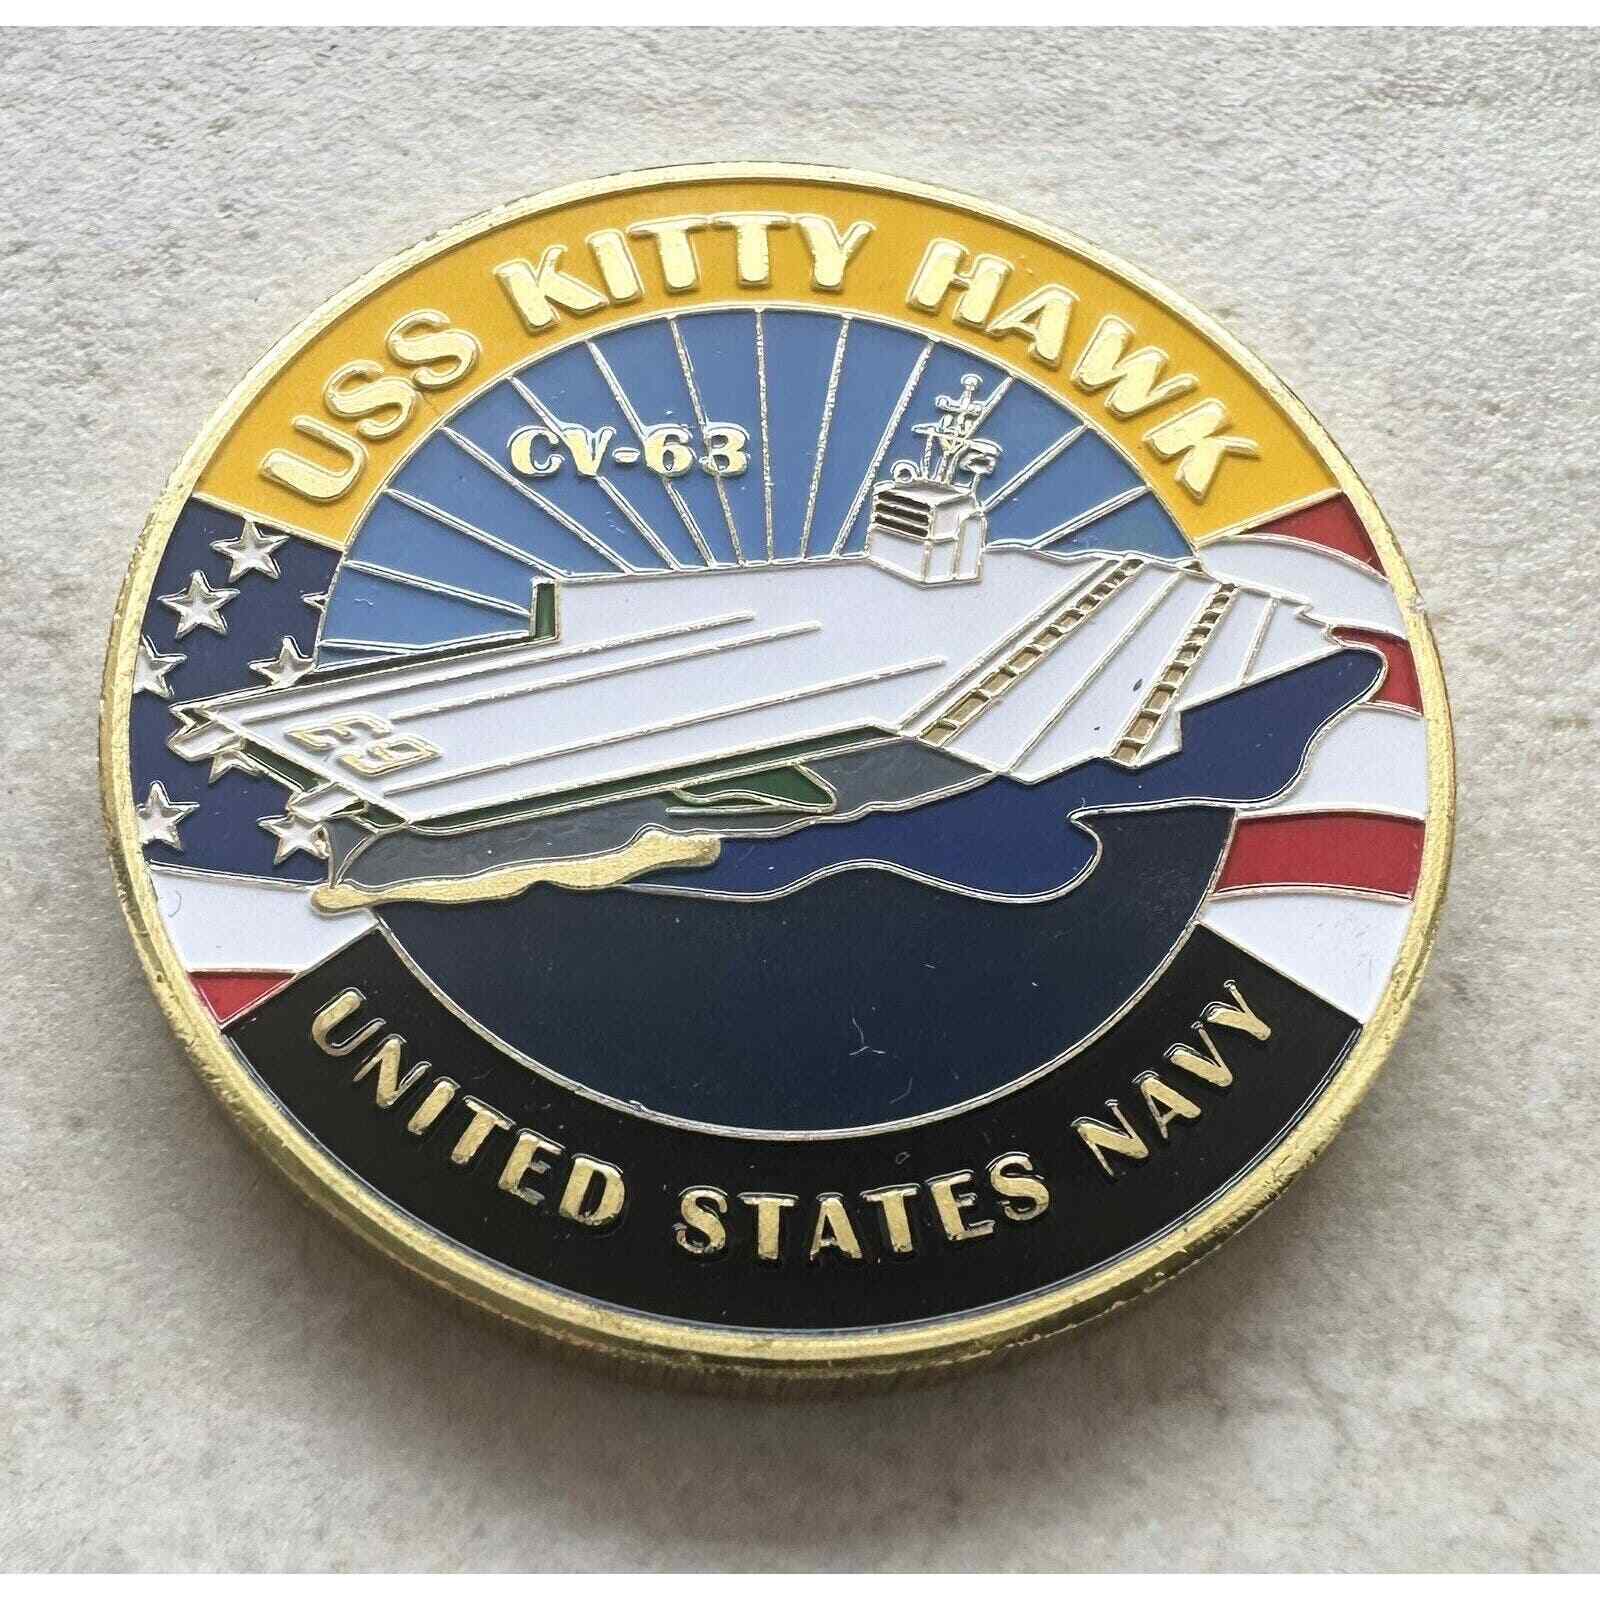 US NAVY - USS KITTY HAWK - CV-63 - Challenge Coin